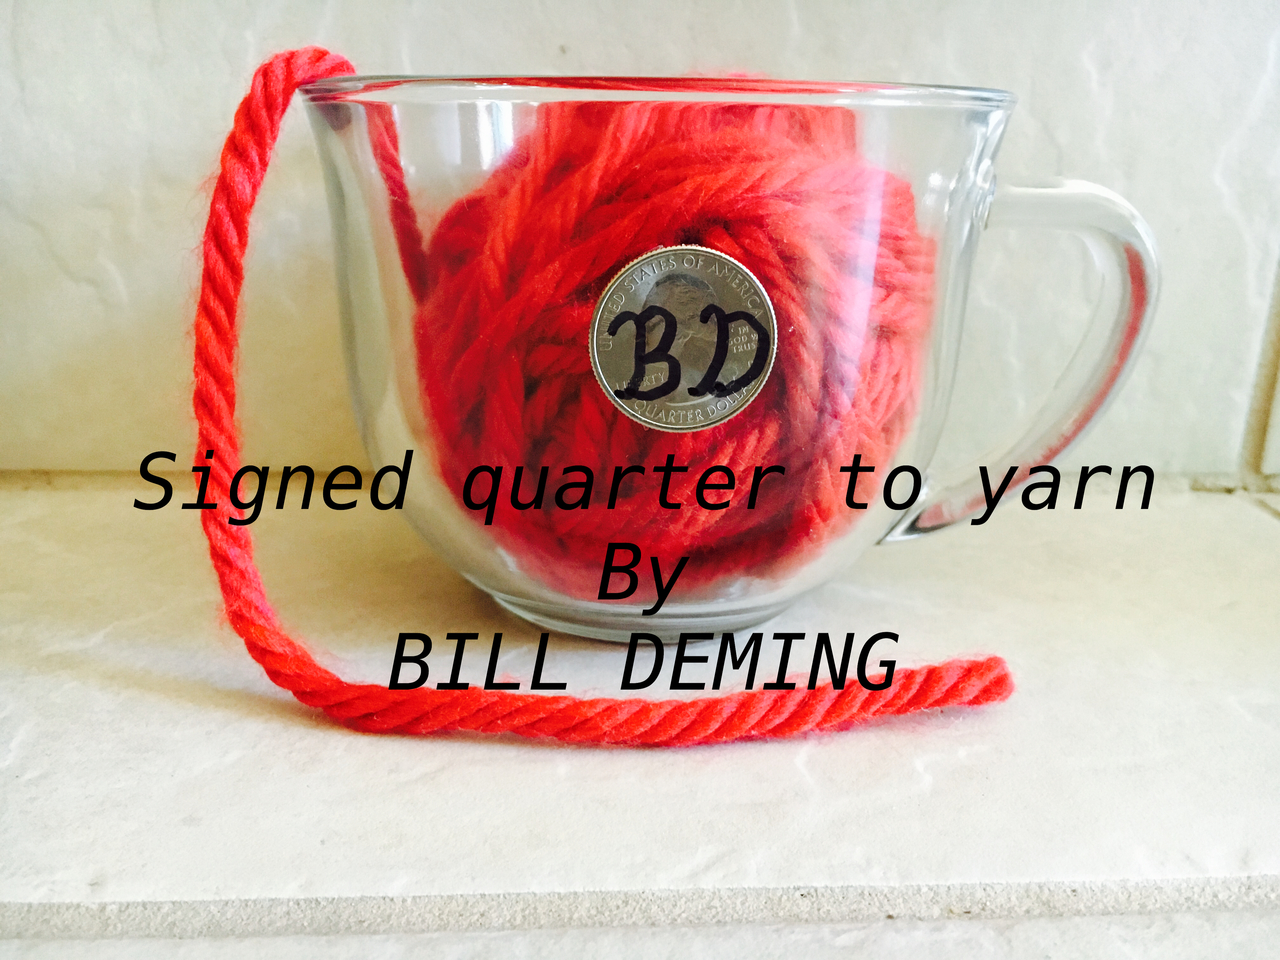 Bill Deming - Signed Quarter to Yarn